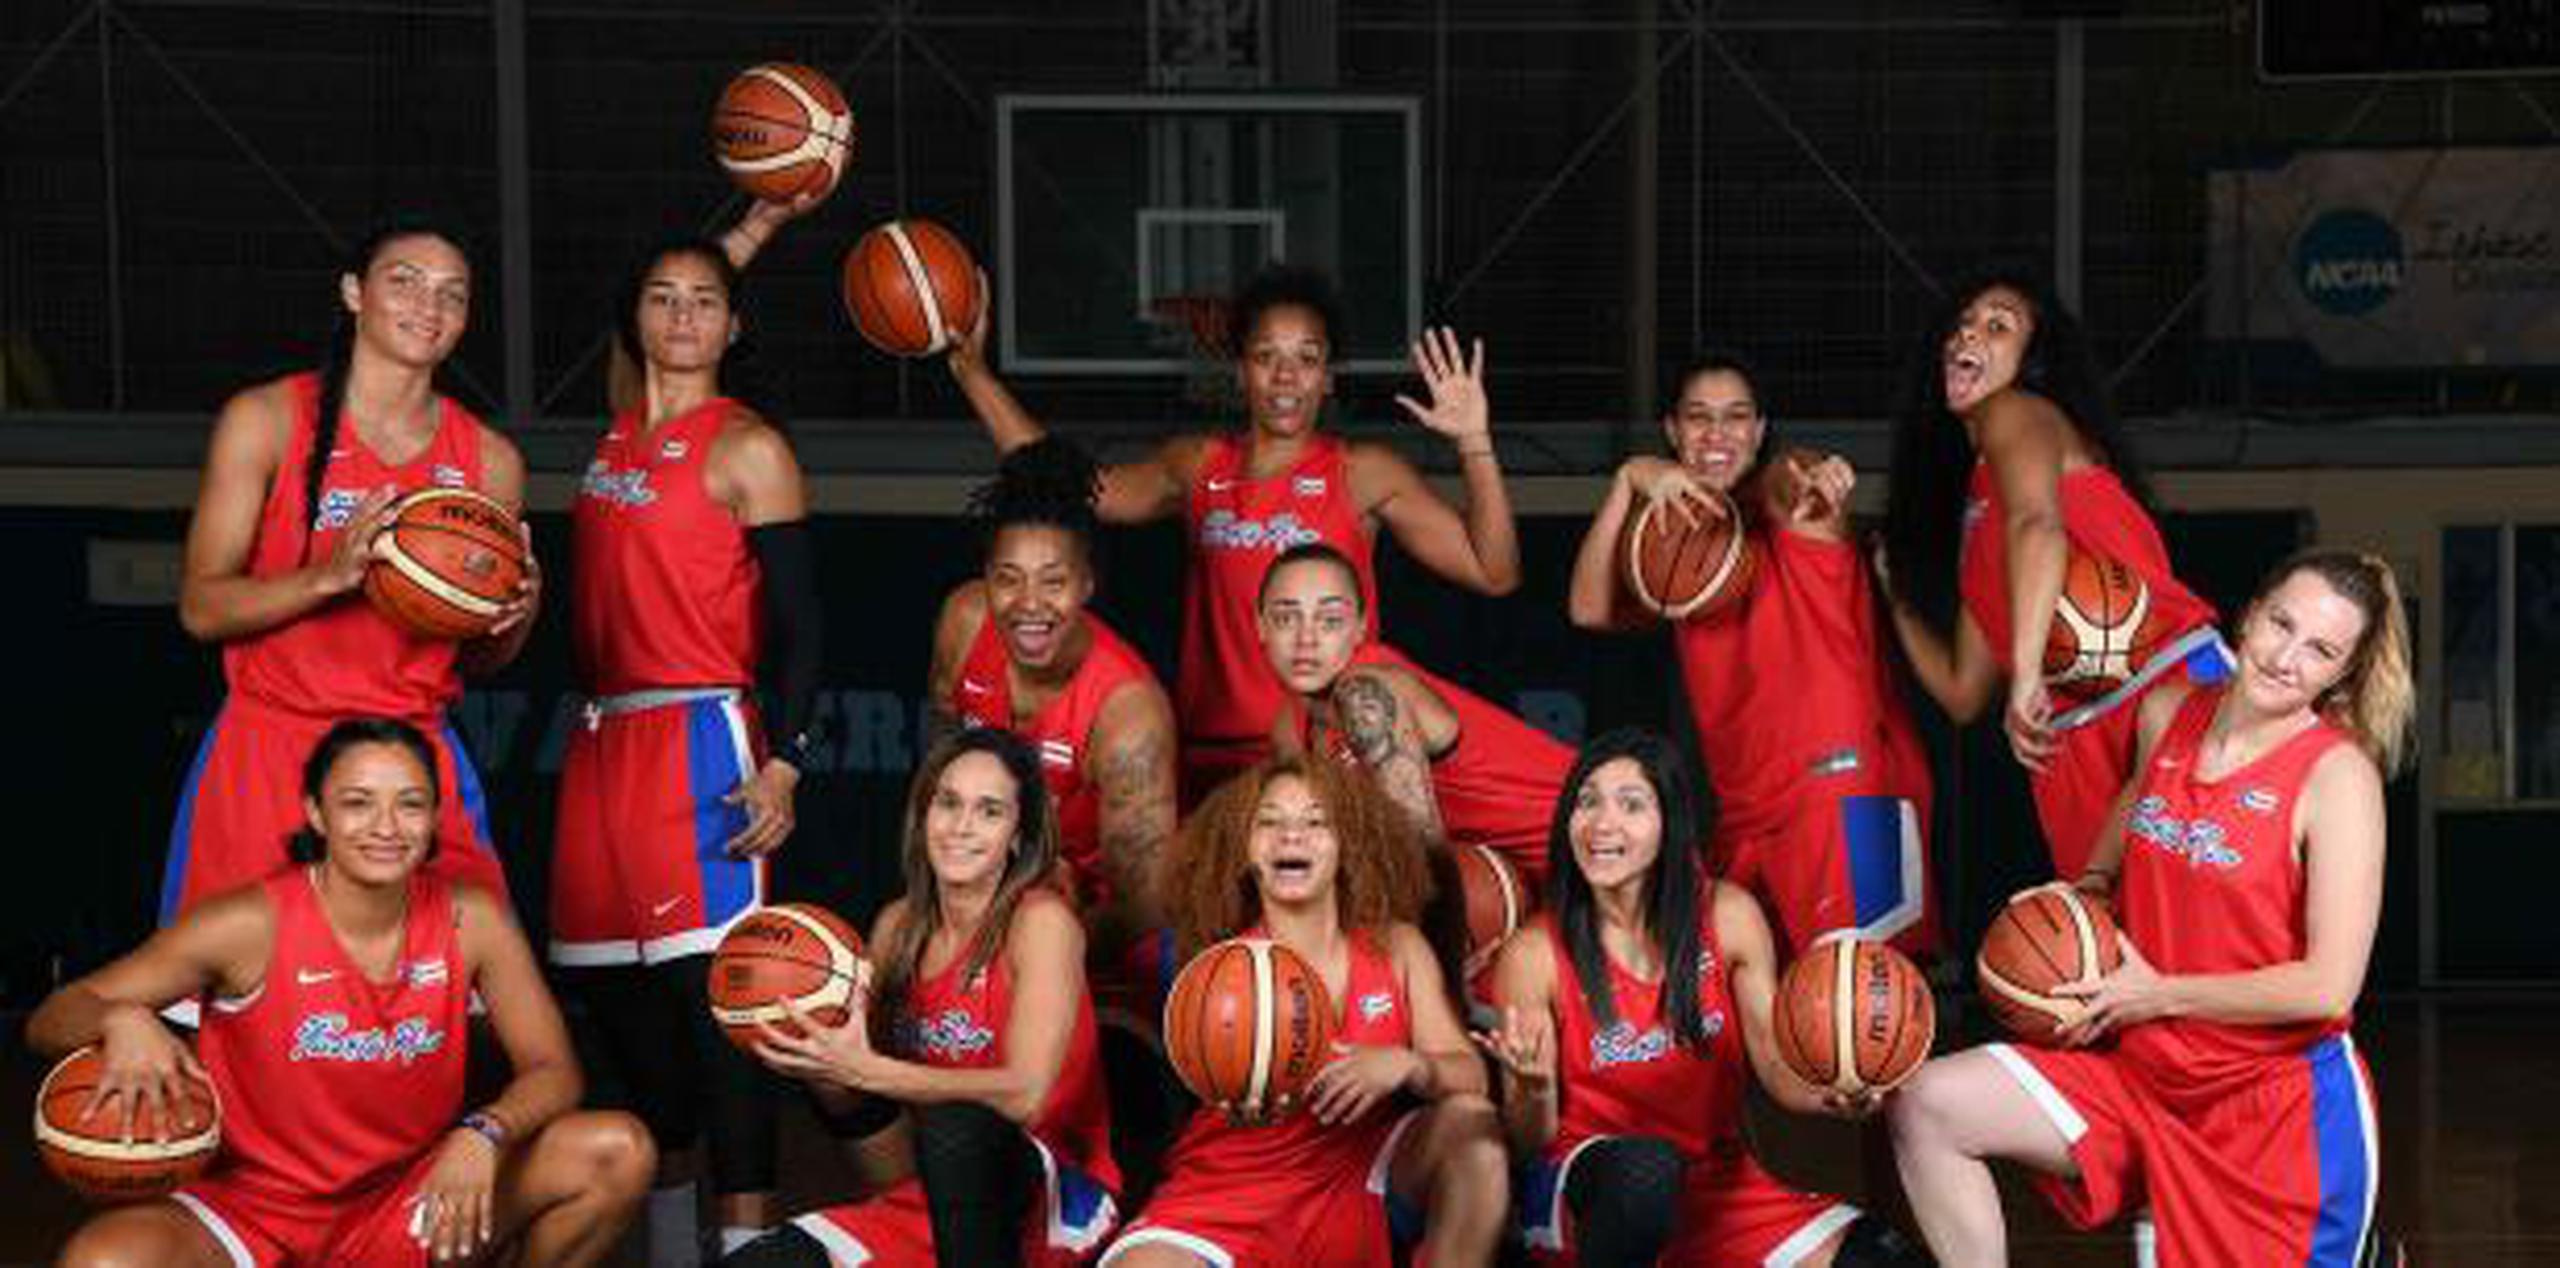 Equipo Nacional de baloncesto femenino que irá al Mundial. (Andre Kang / andre.kang@gfrmedia.com)